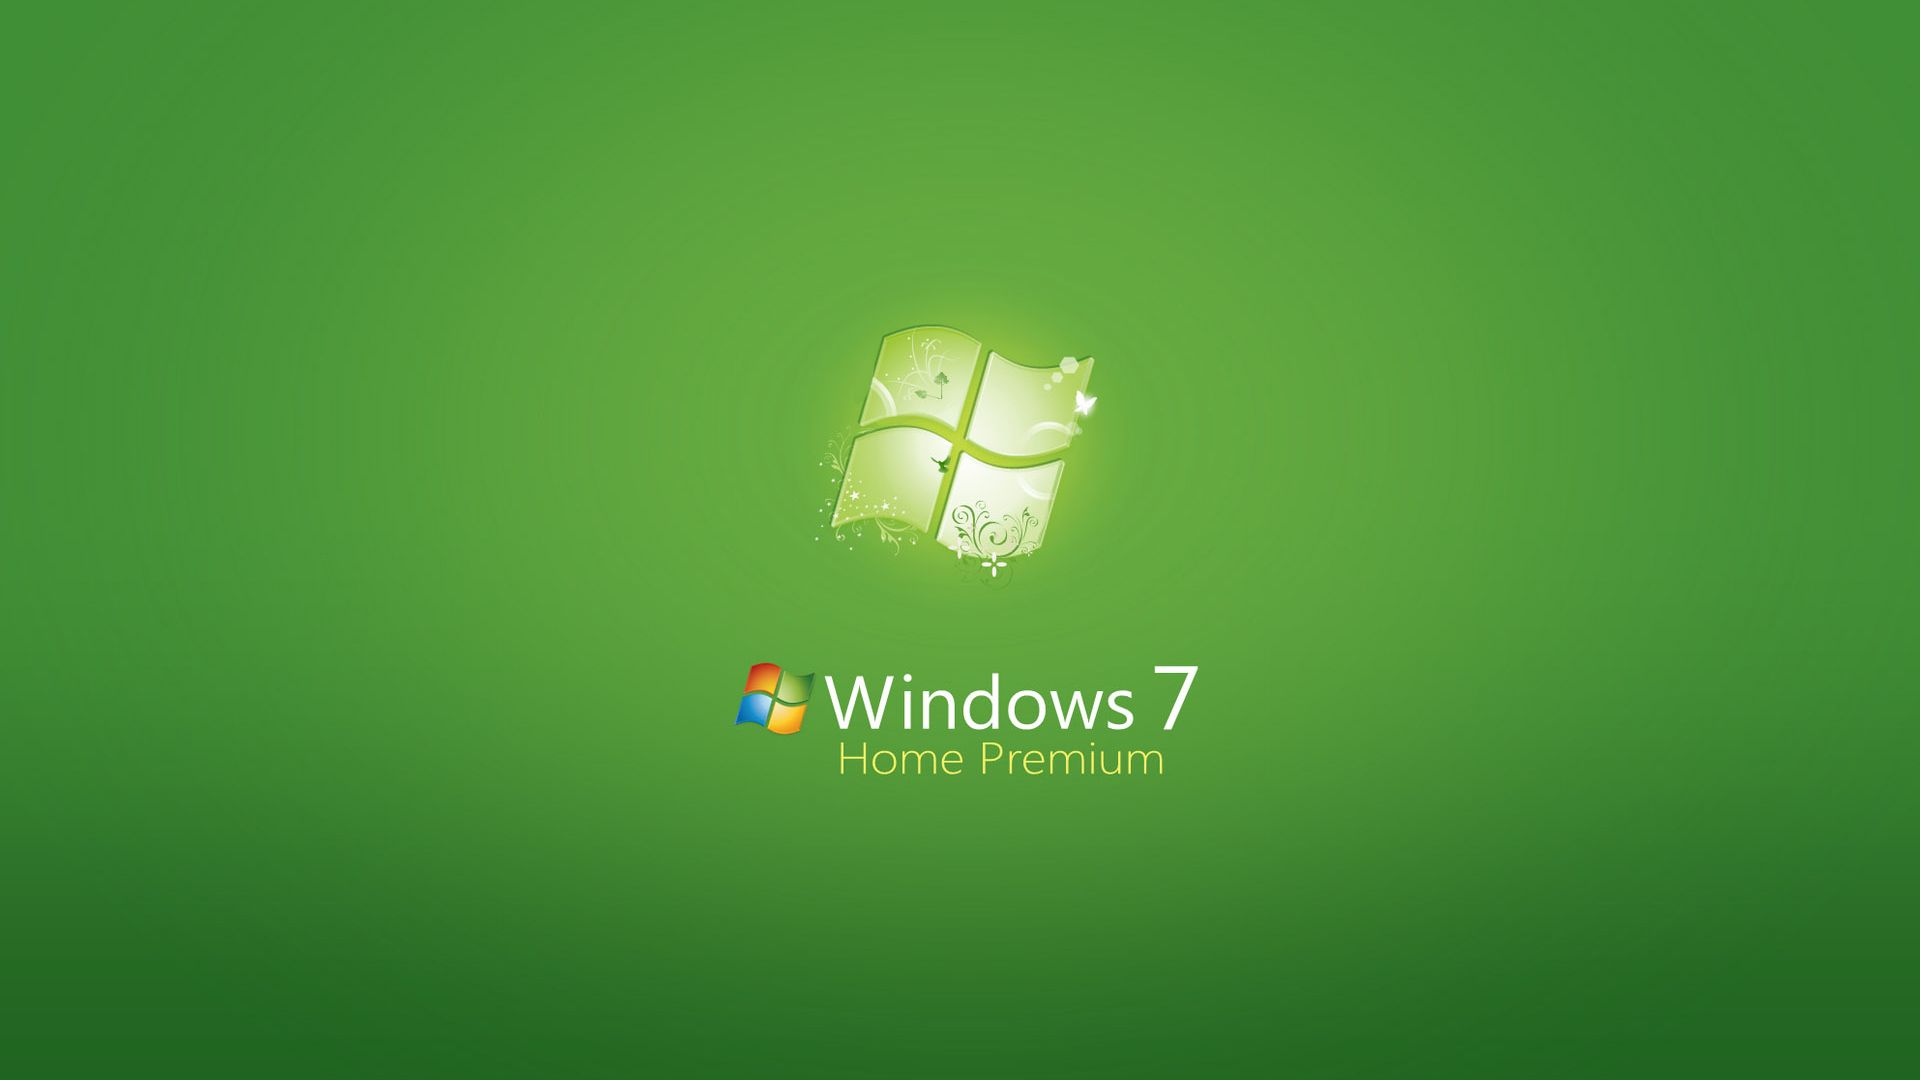 Desktop Wallpaper Gallery Windows 7 Windows 7 Home Premium